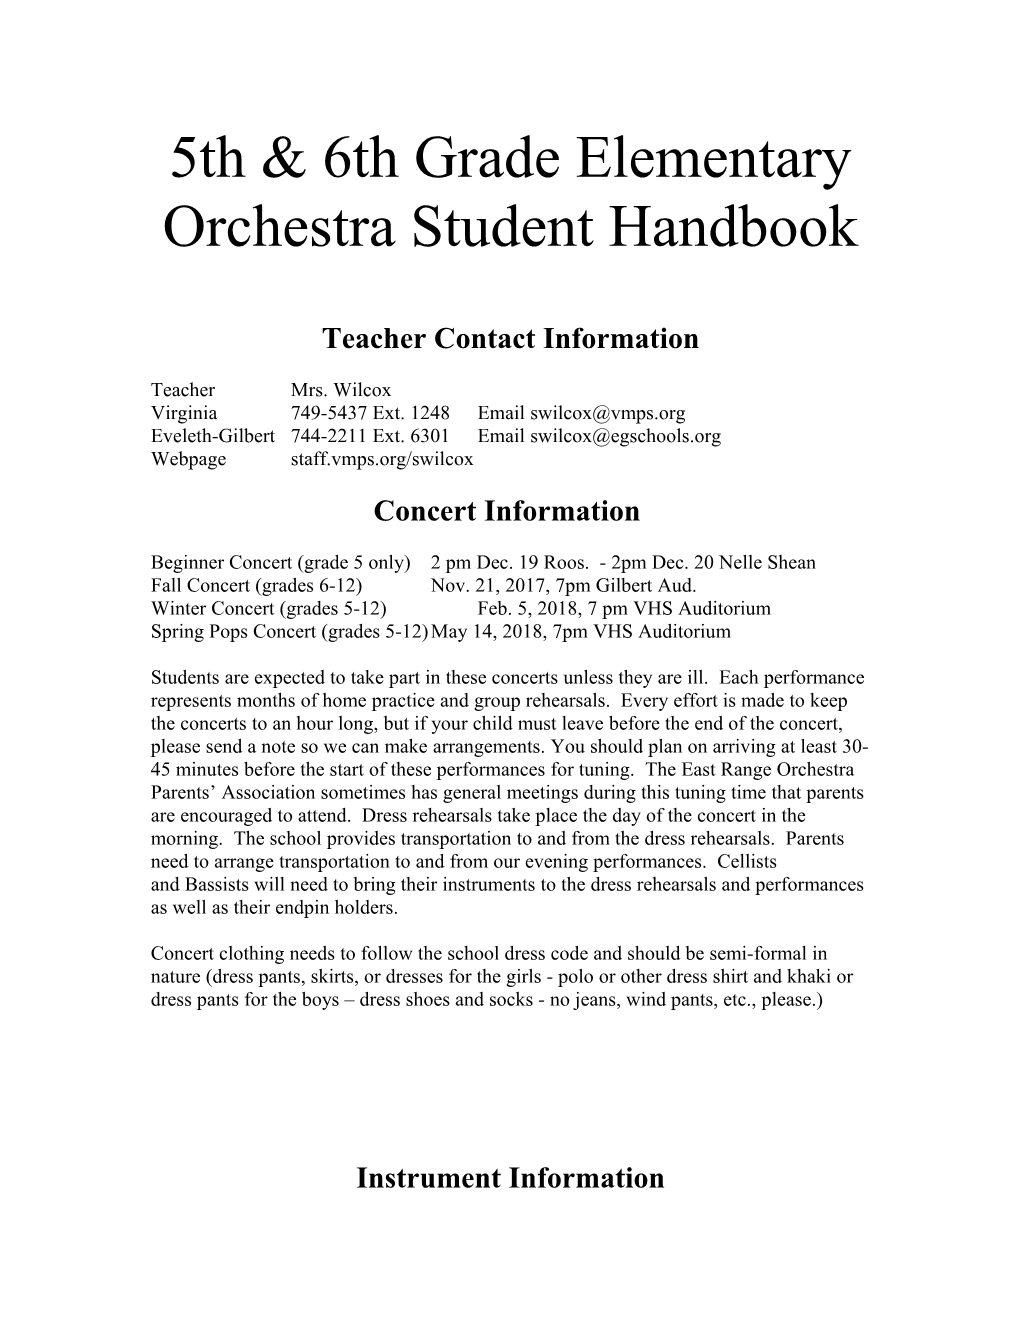 5Th & 6Th Grade Elementary Orchestra Student Handbook